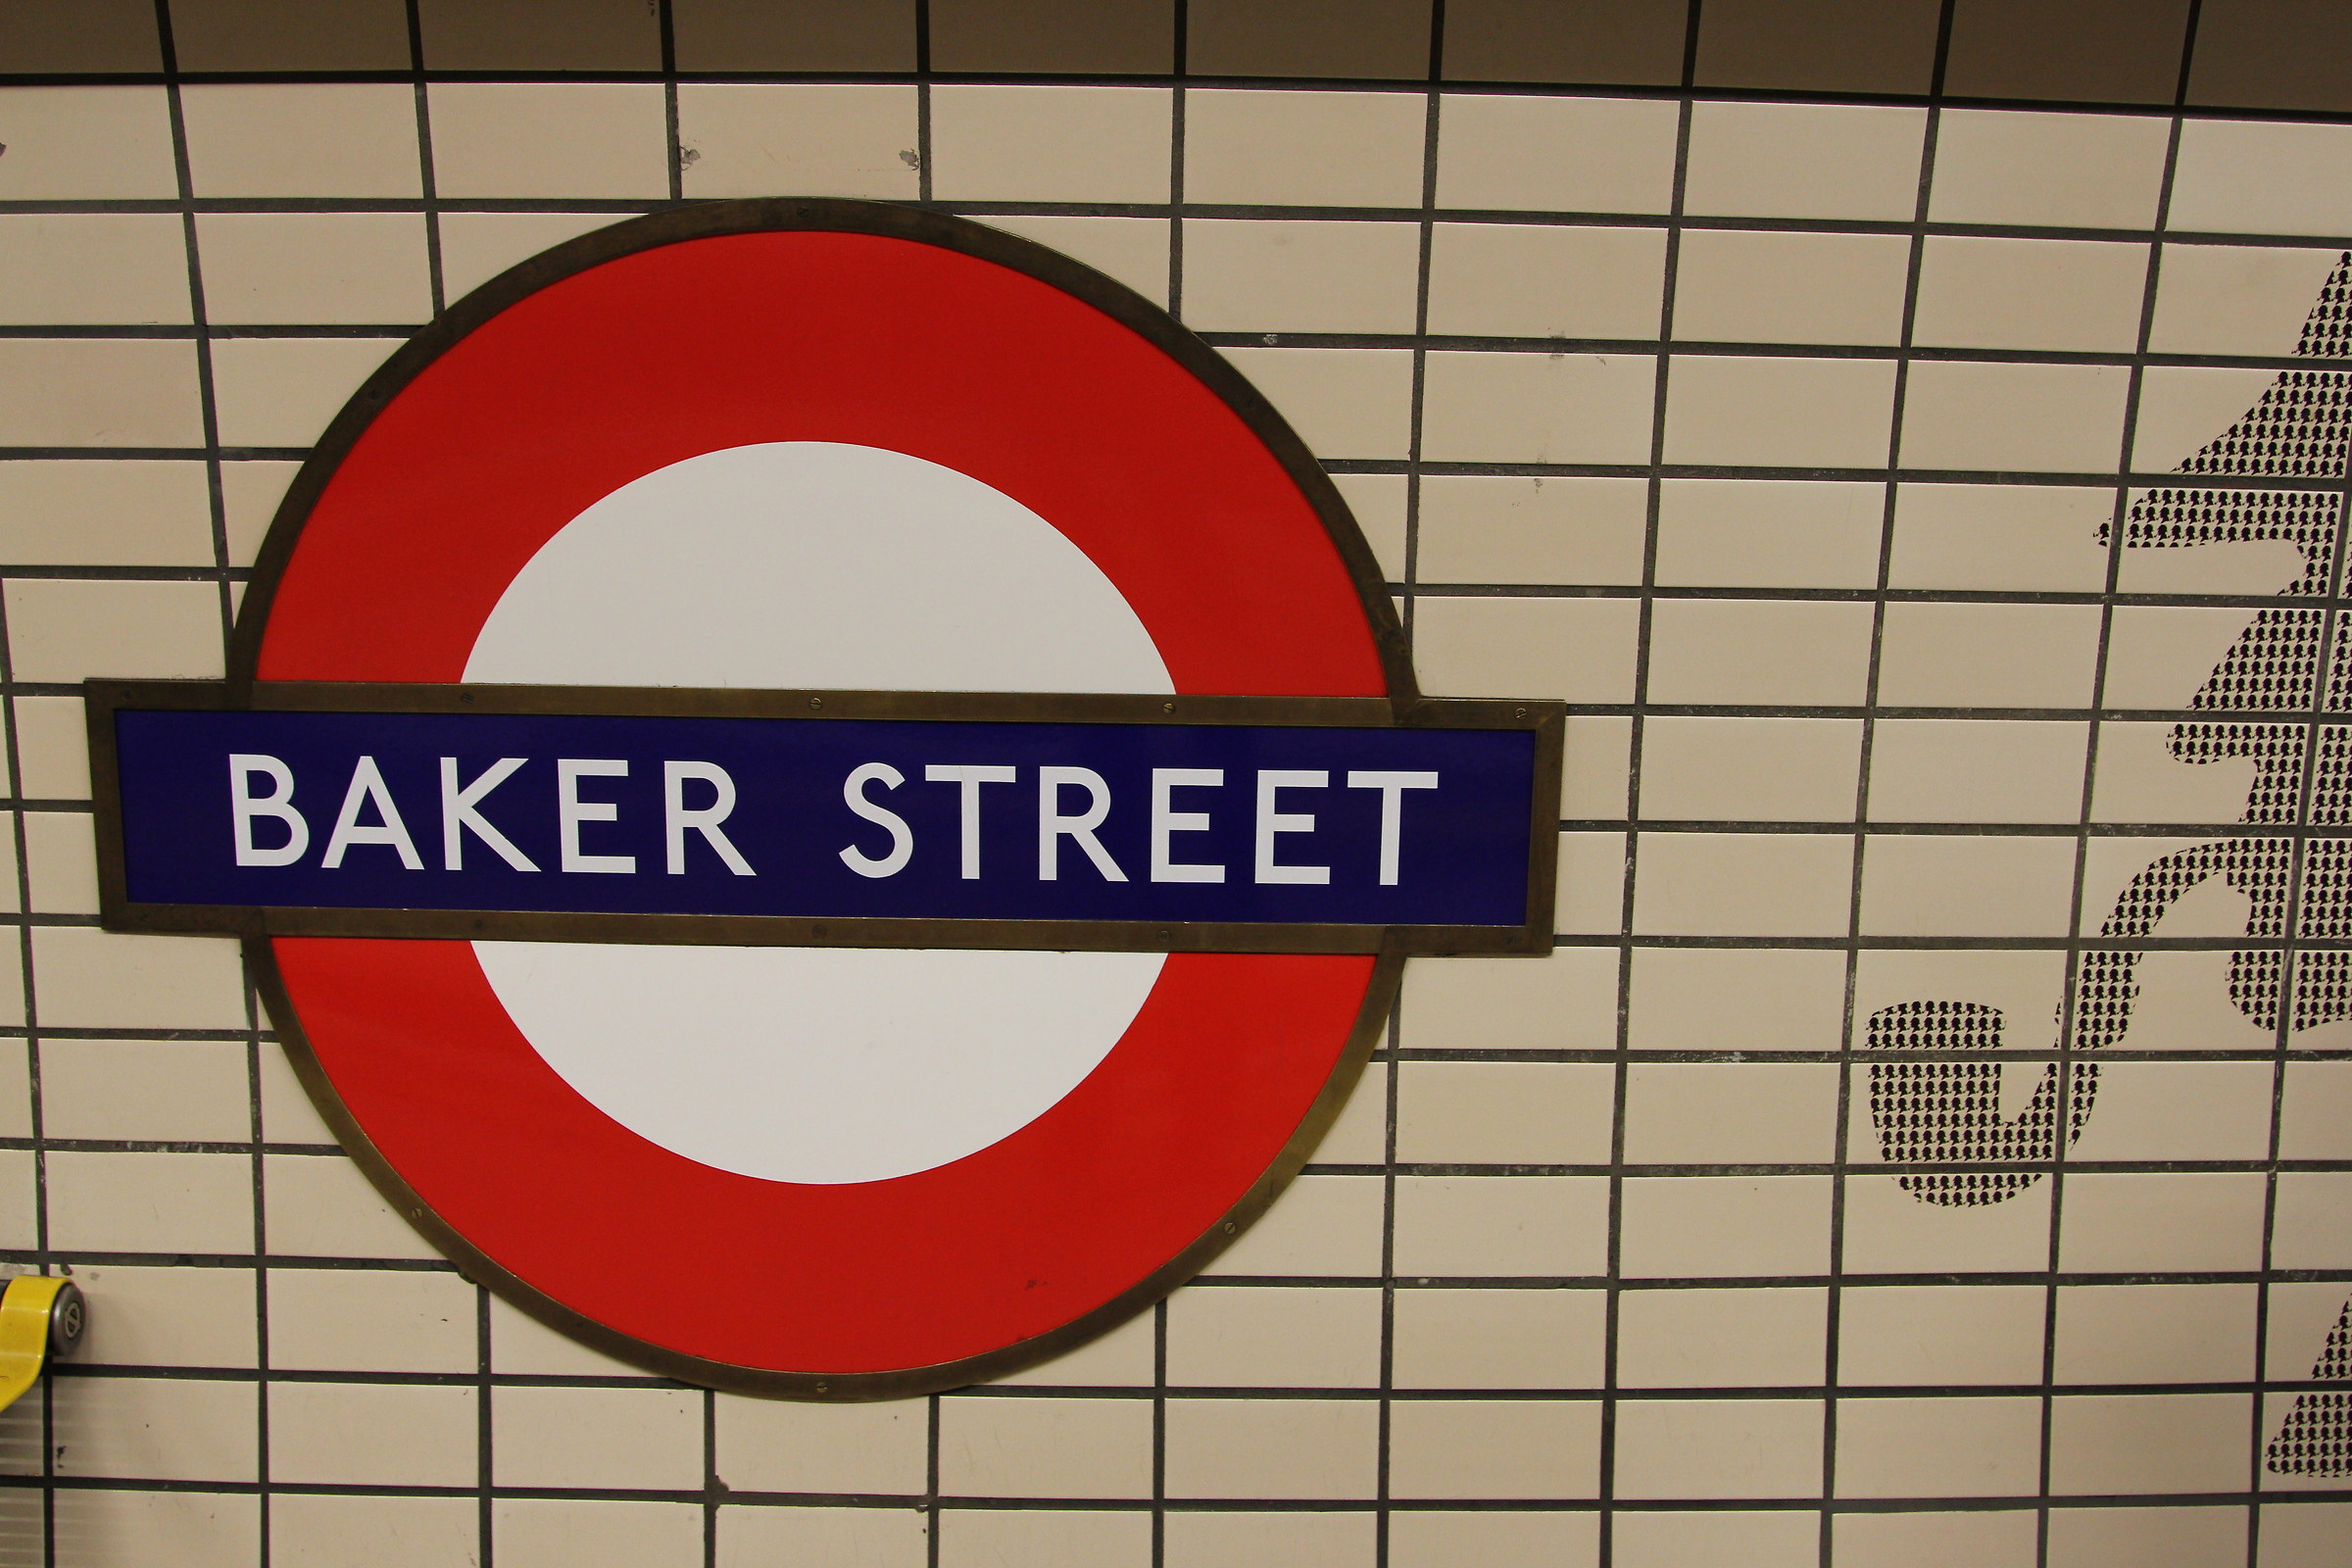 Baker Street subway...